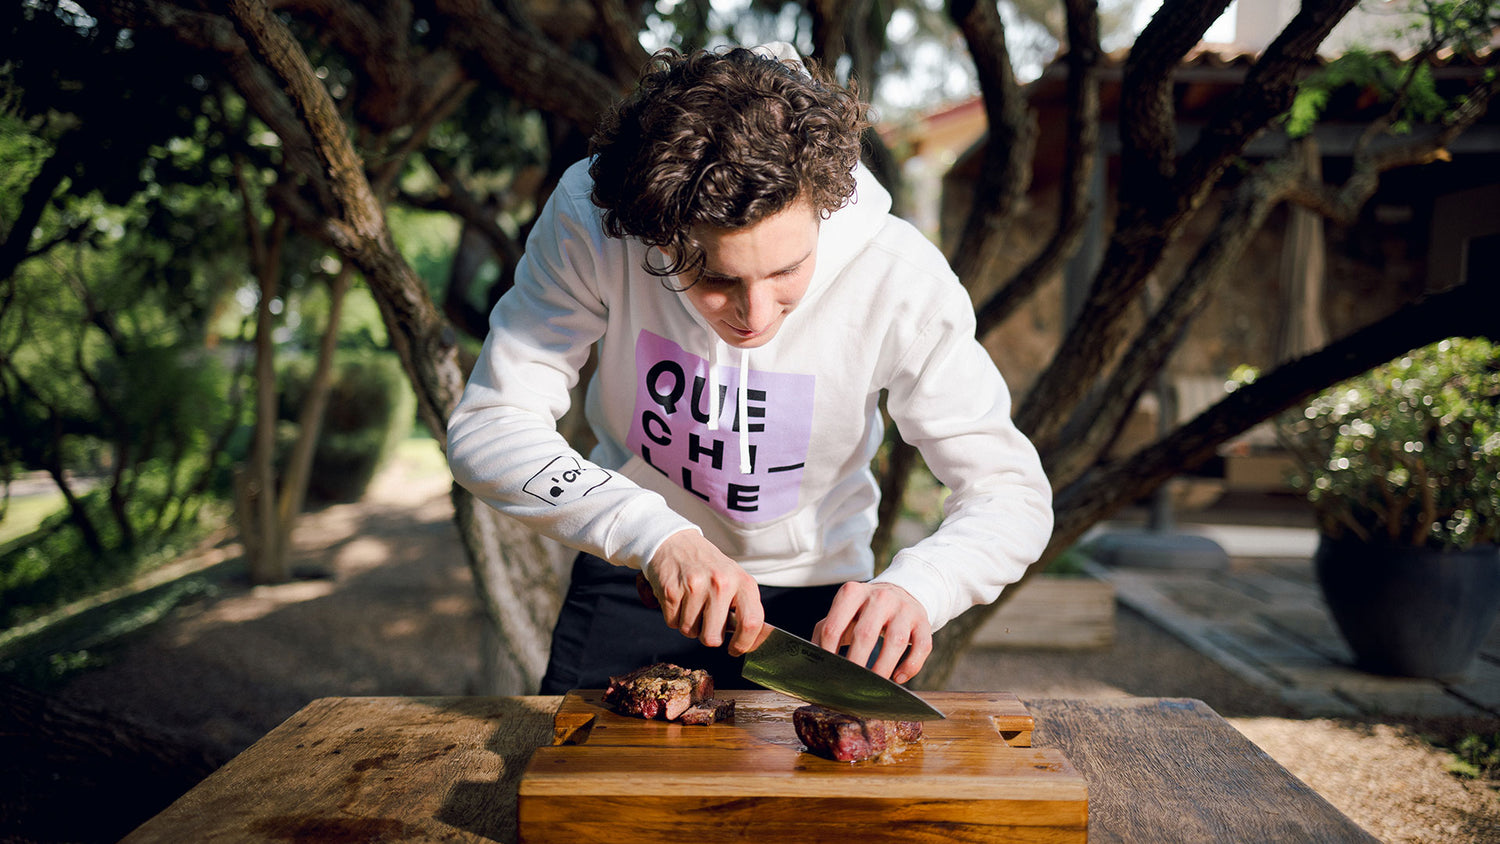 Roberto morales con cuchillos profesionales SÜSH by RobeGrill "the sound of cooking"